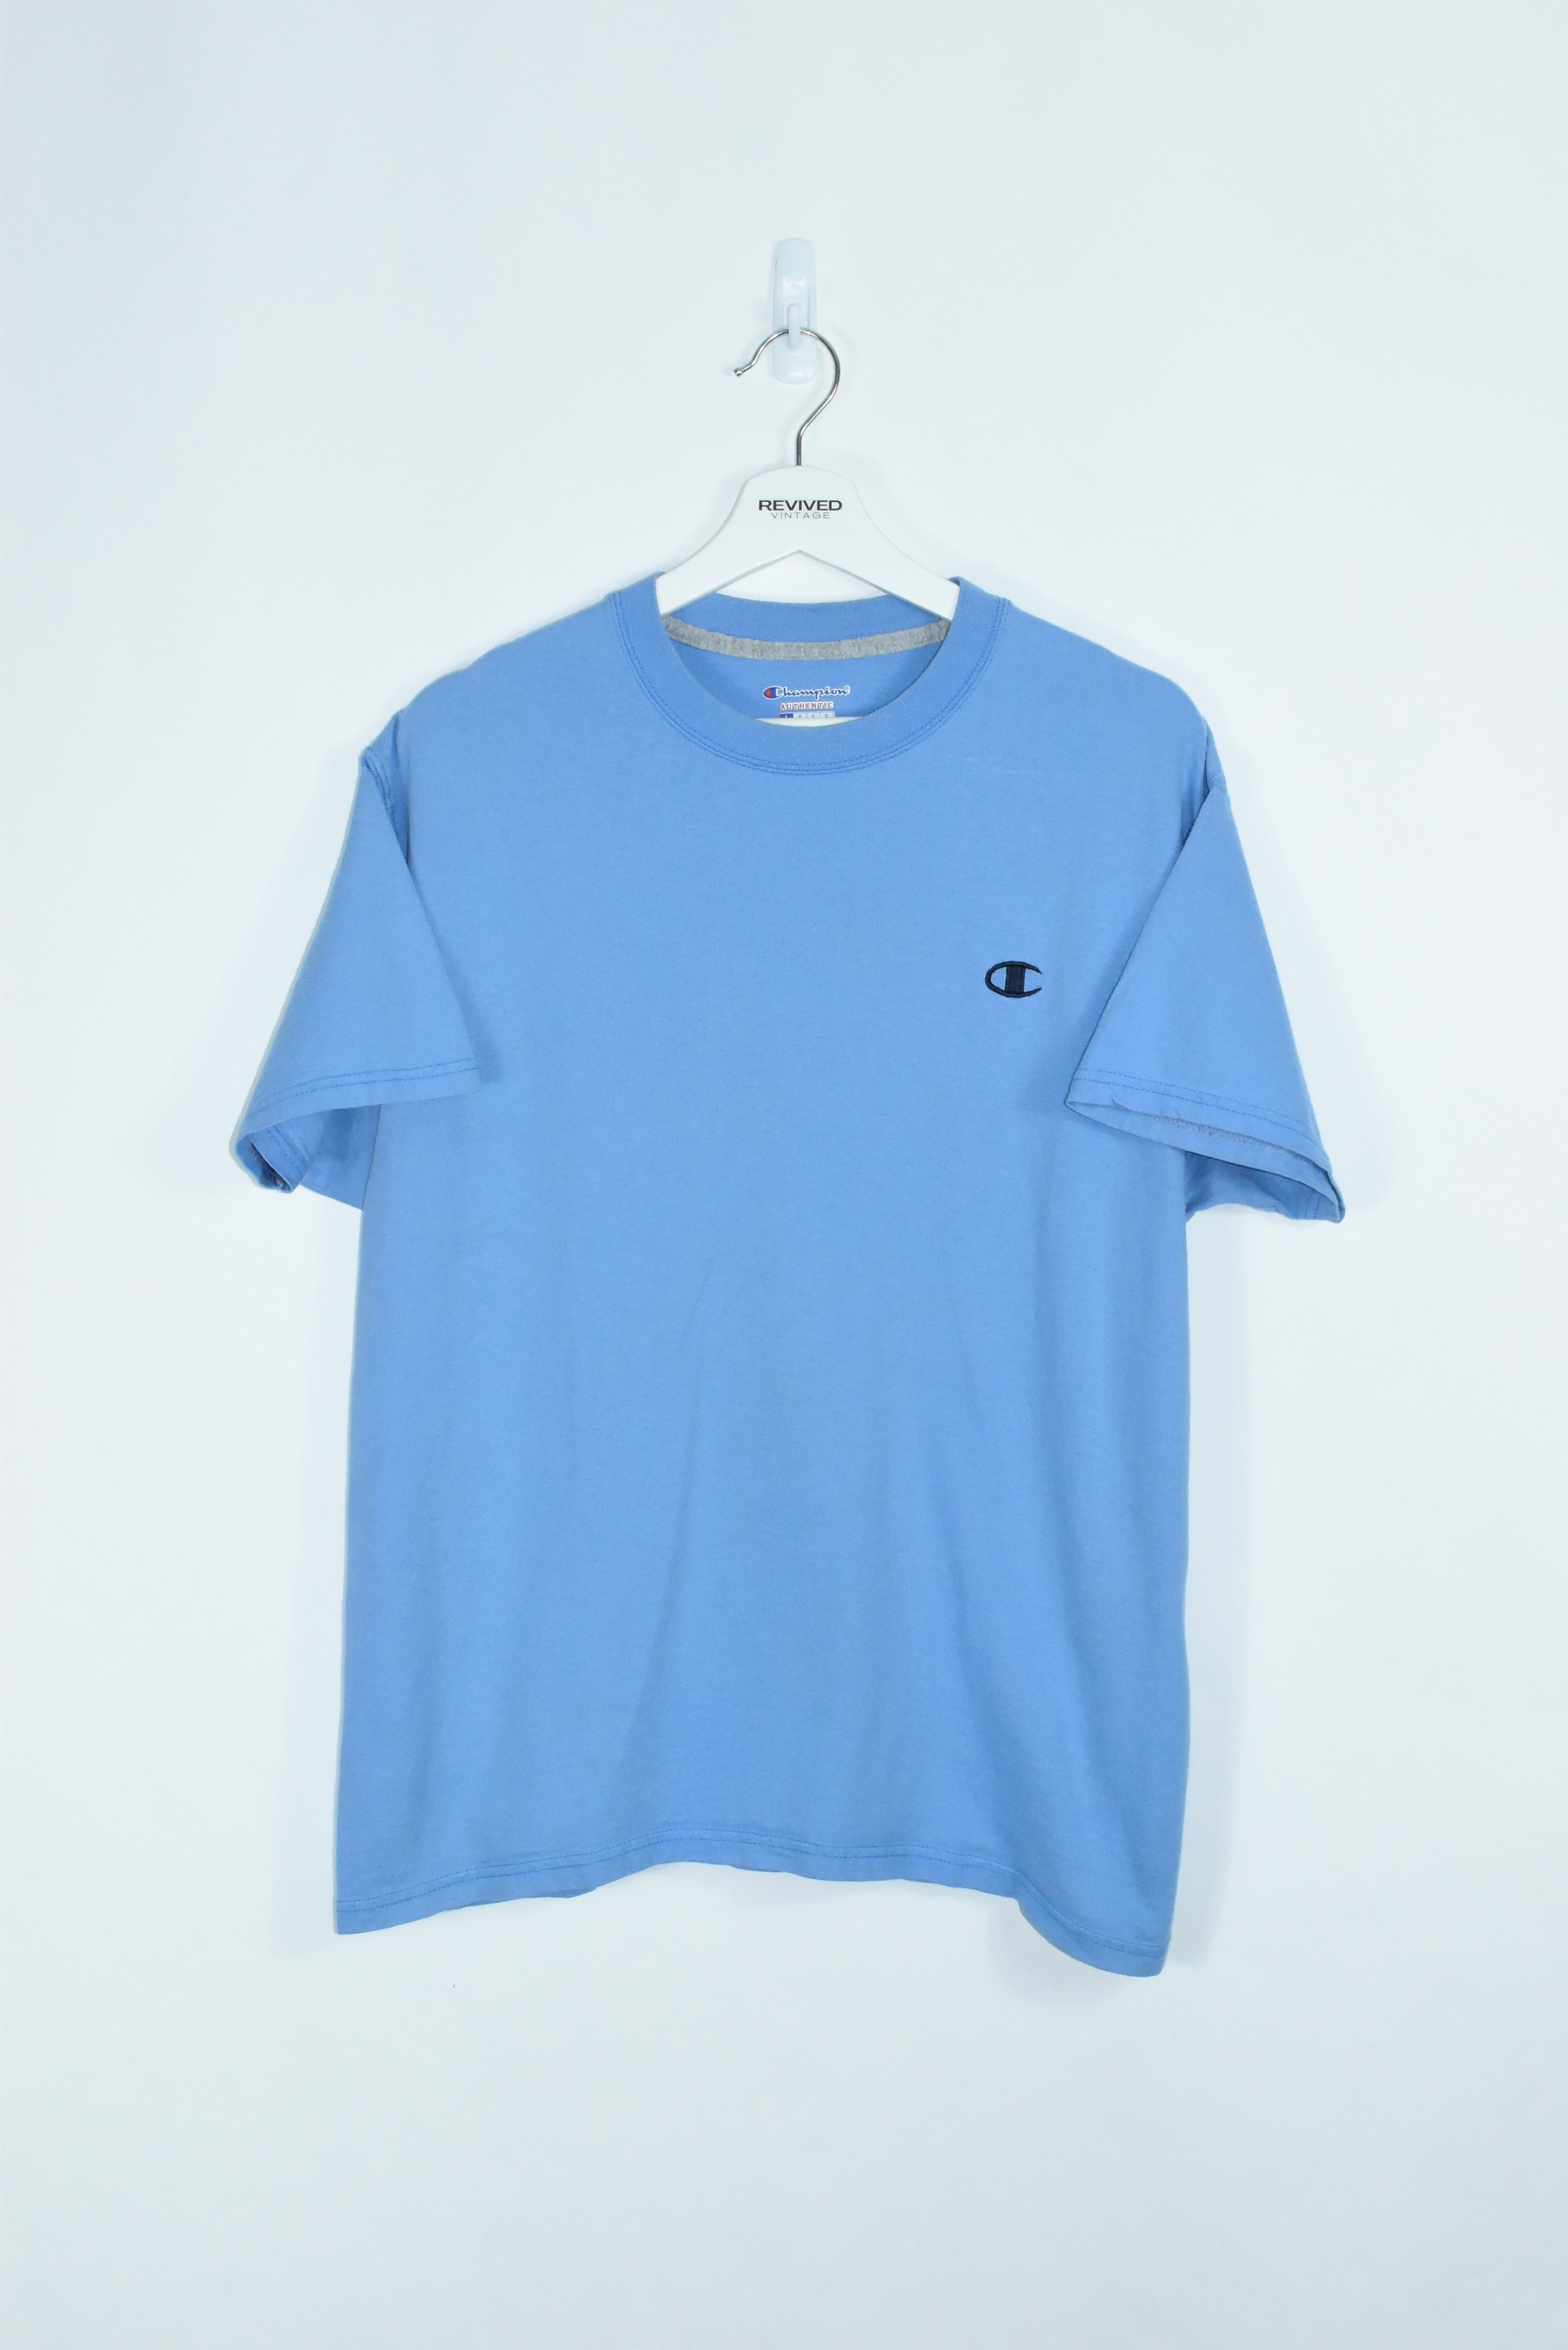 Vintage Champion Baby Blue T Shirt Medium / Large